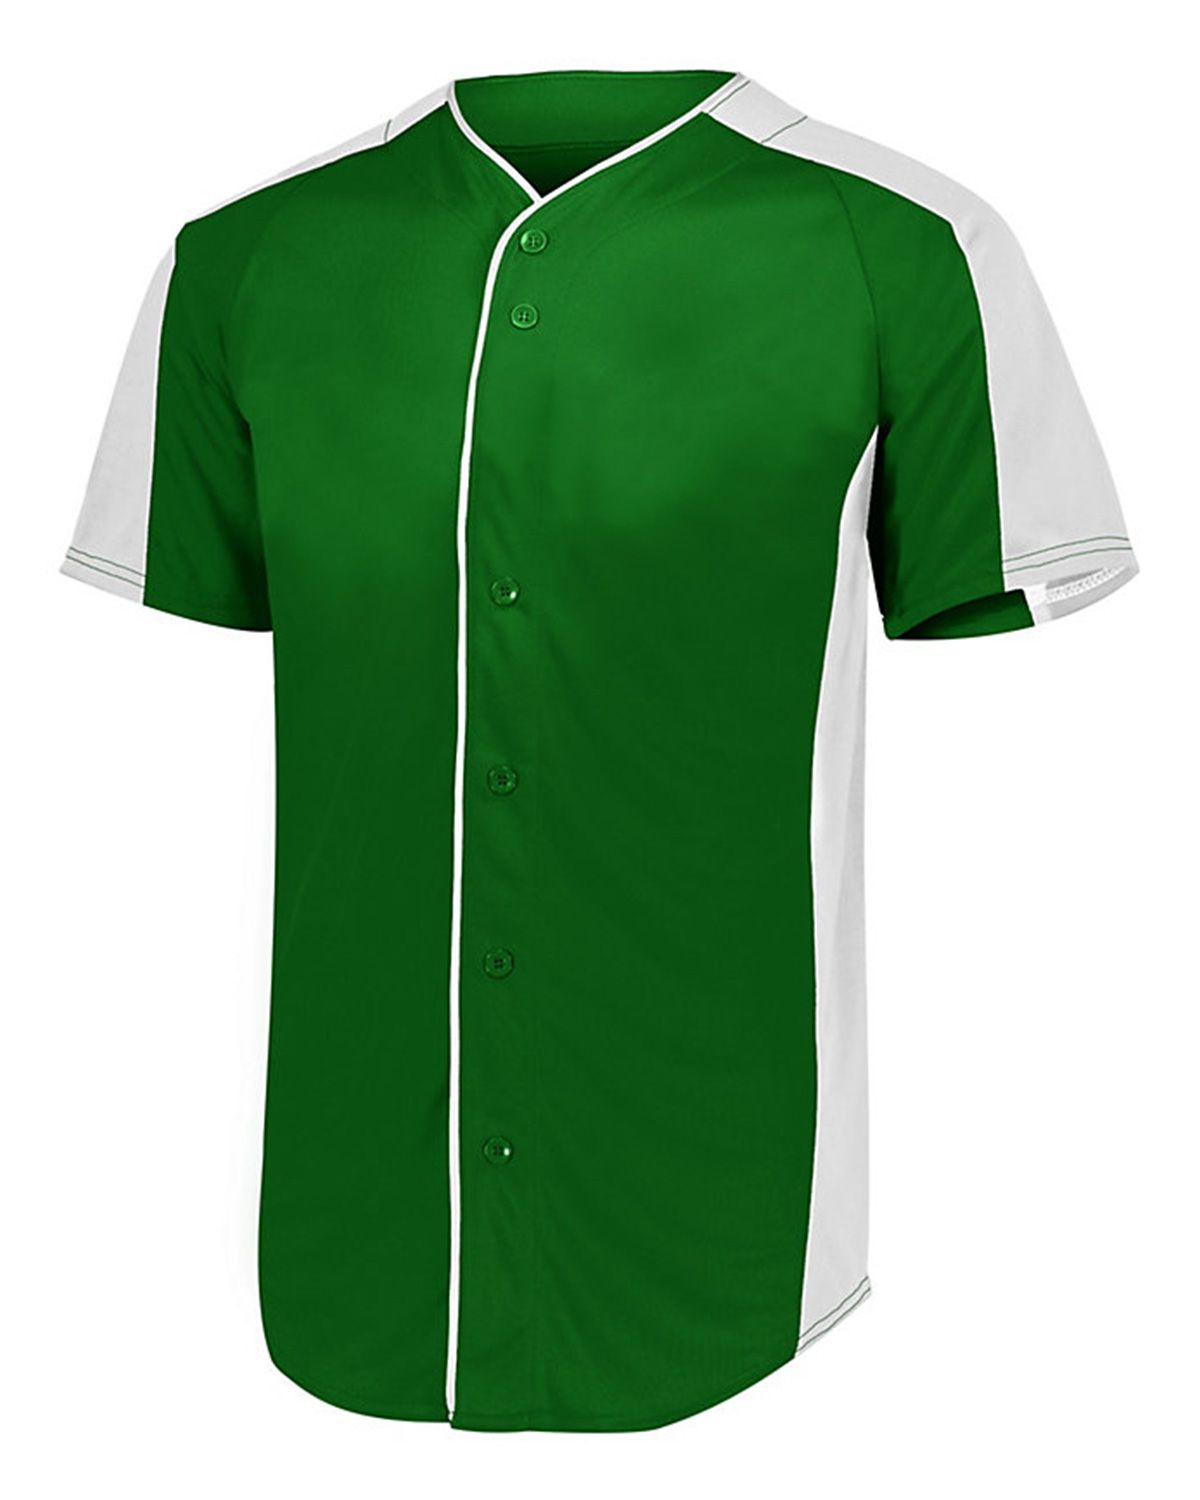 white and green baseball jersey